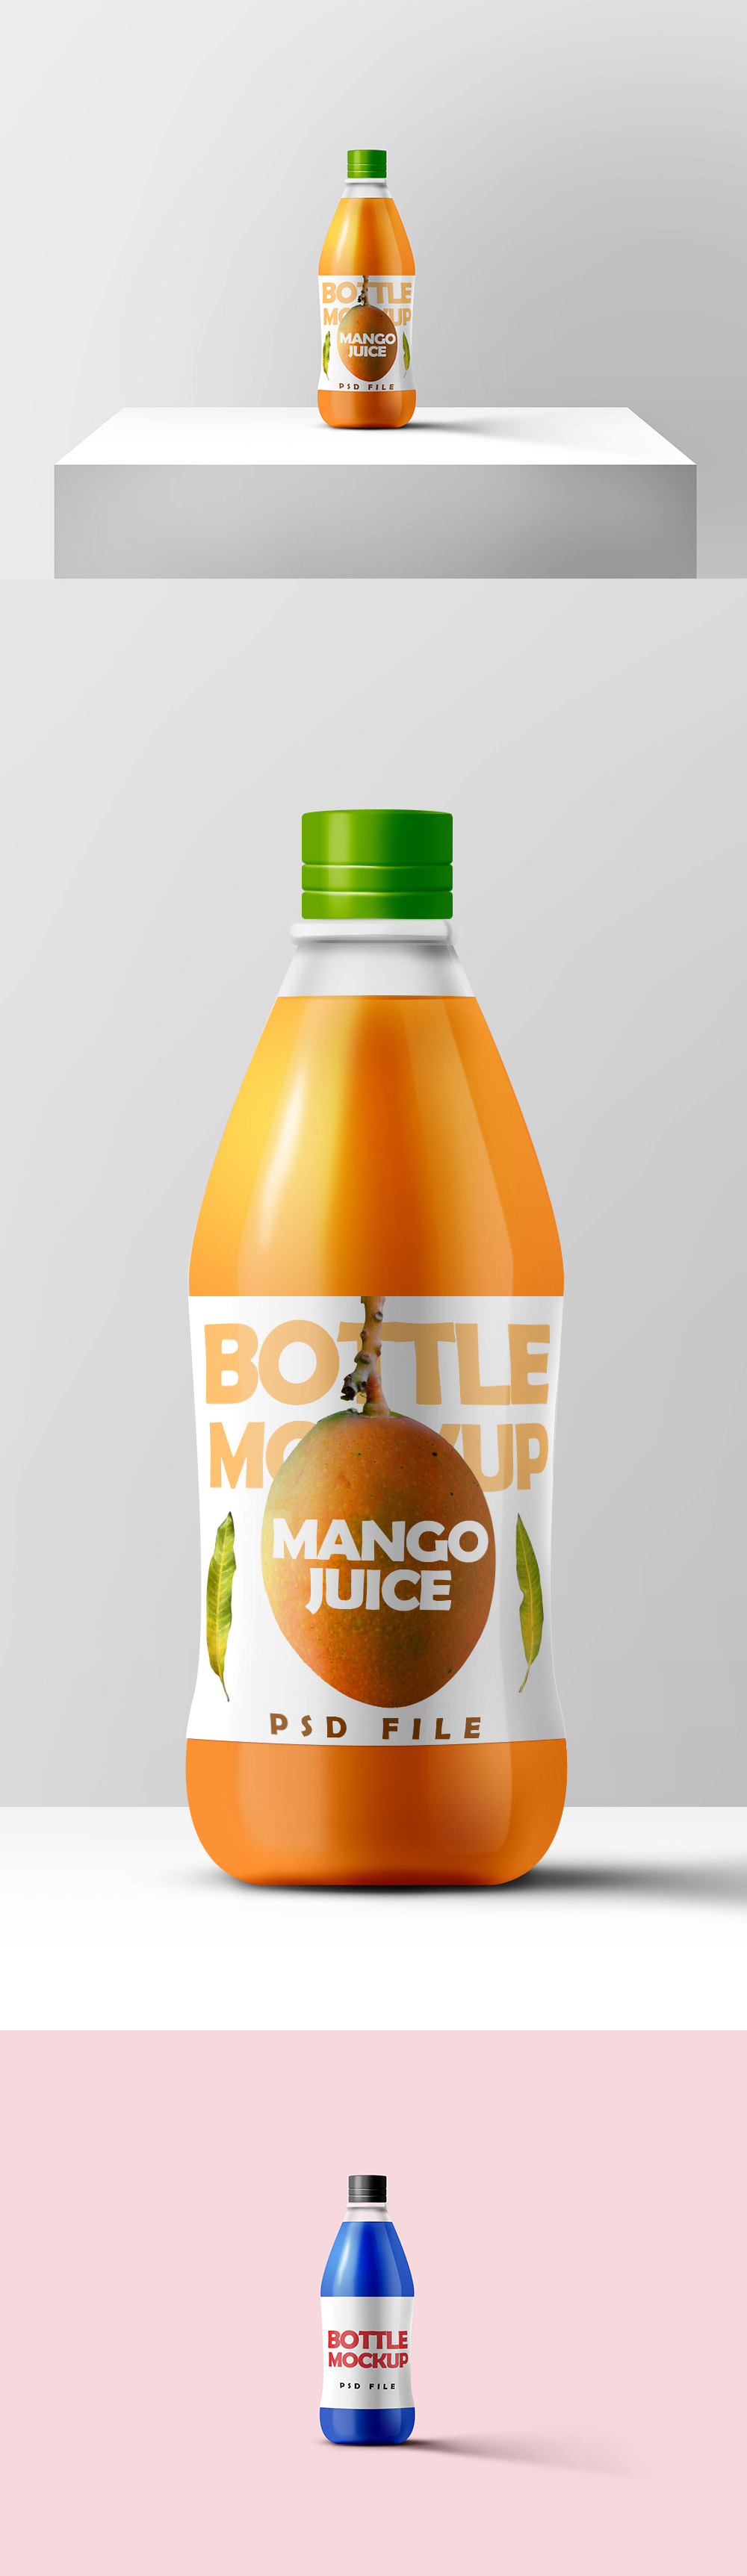 Juice Bottle Mockup Free PSD Template - LTHEME